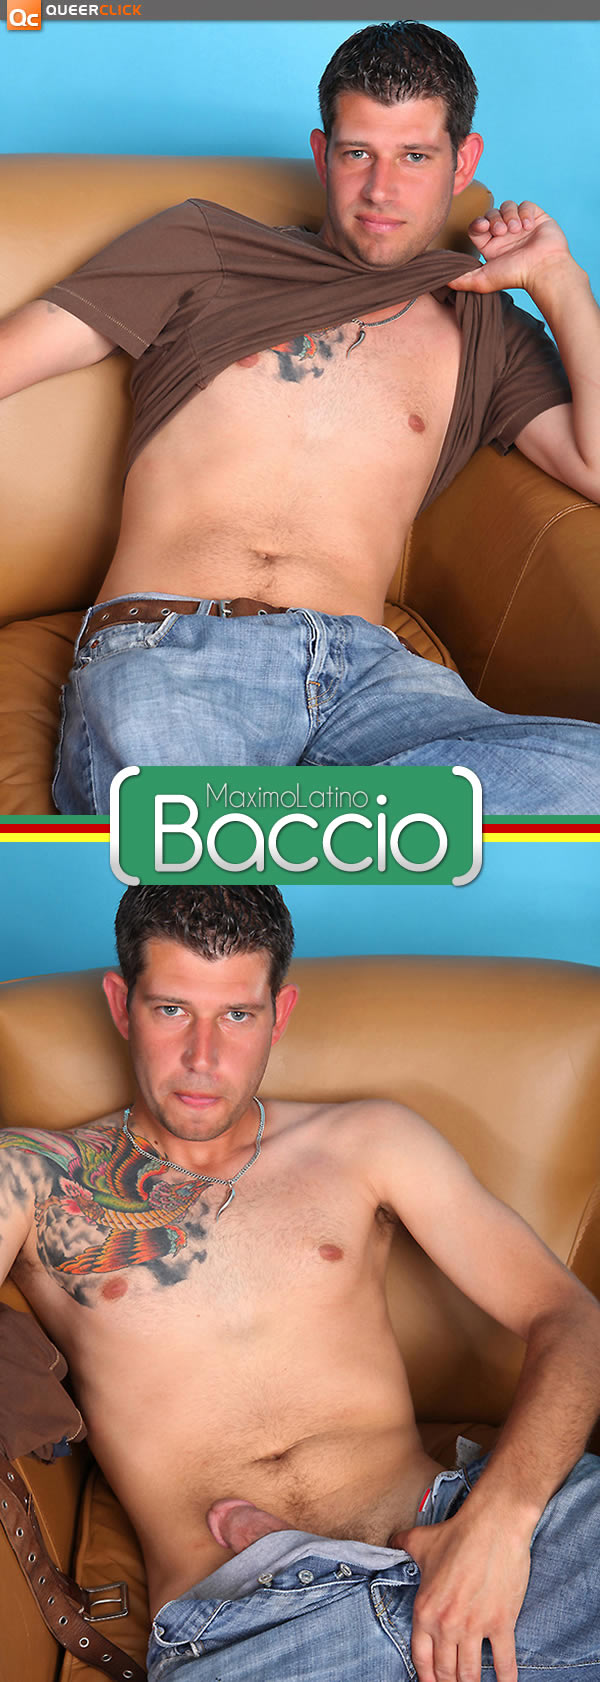 Maximo Latino: Baccio